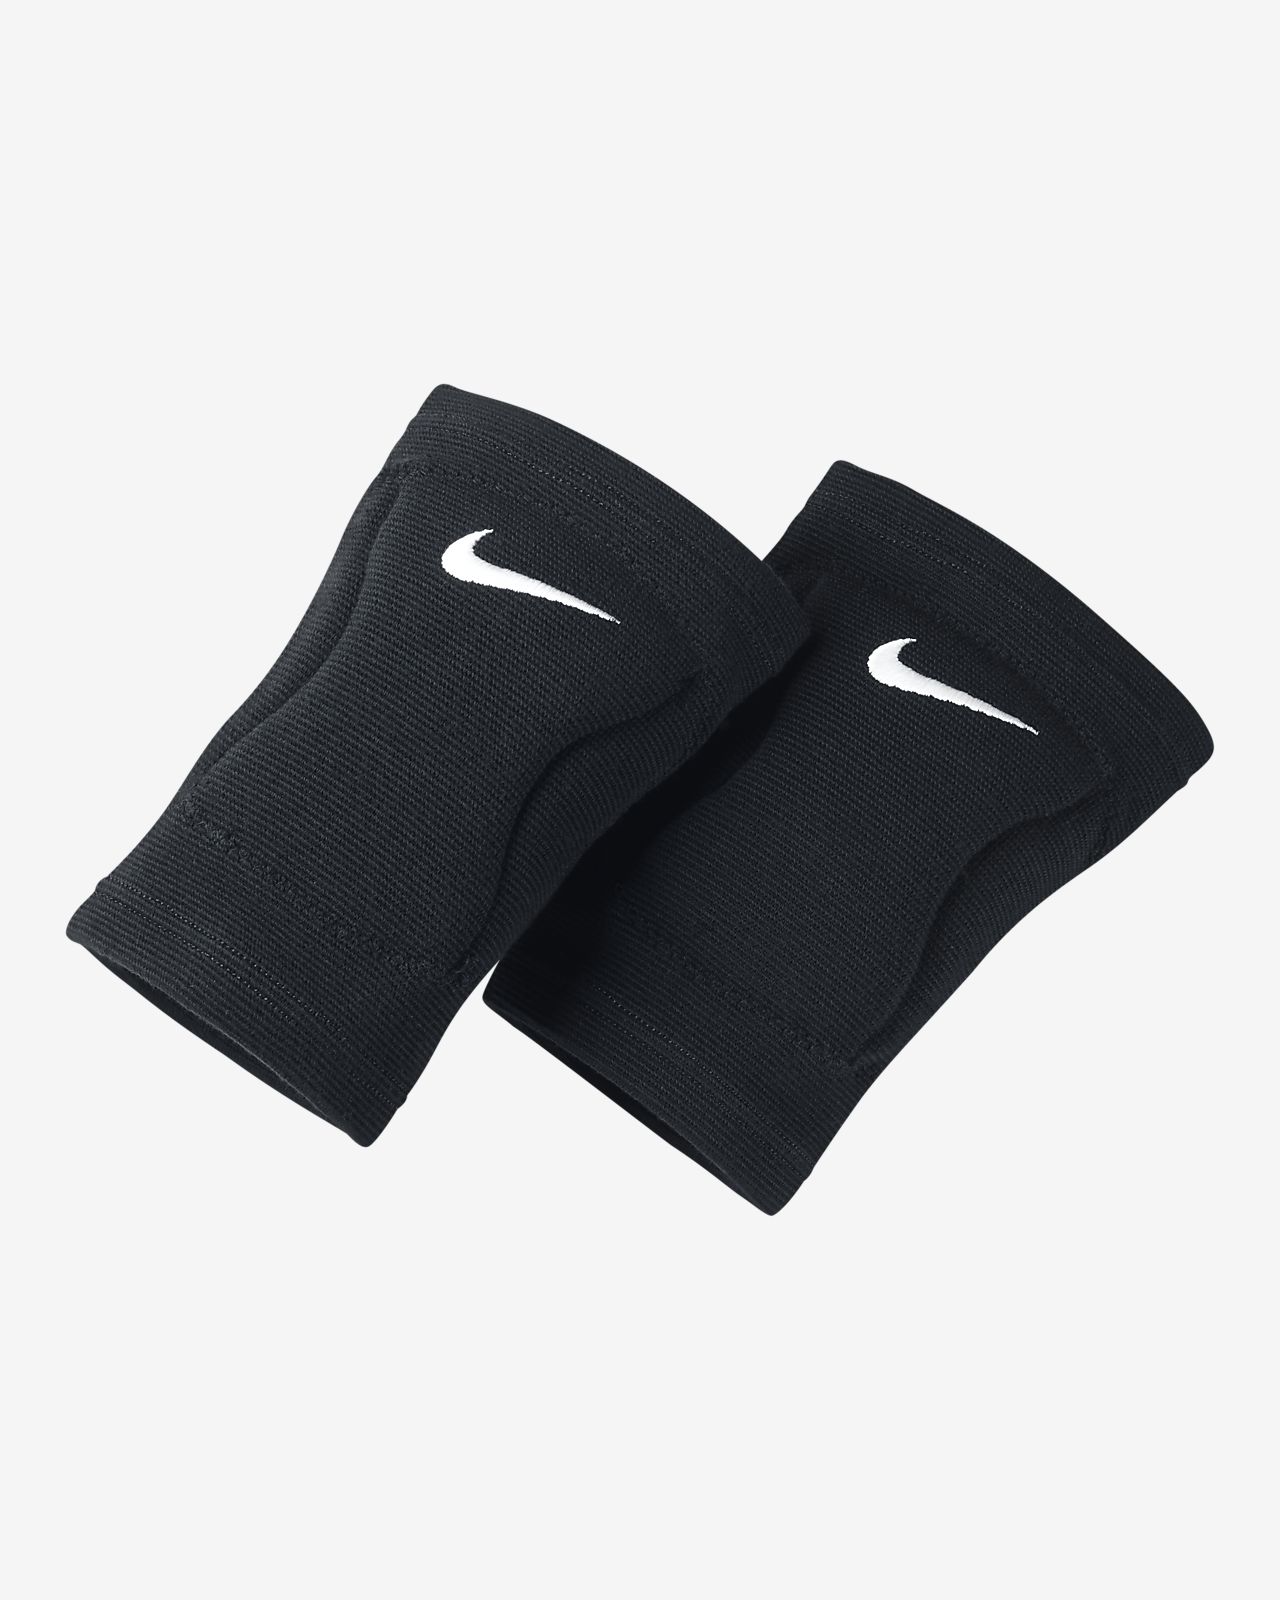 Nike Streak Volleyball Knee Pads Size Chart